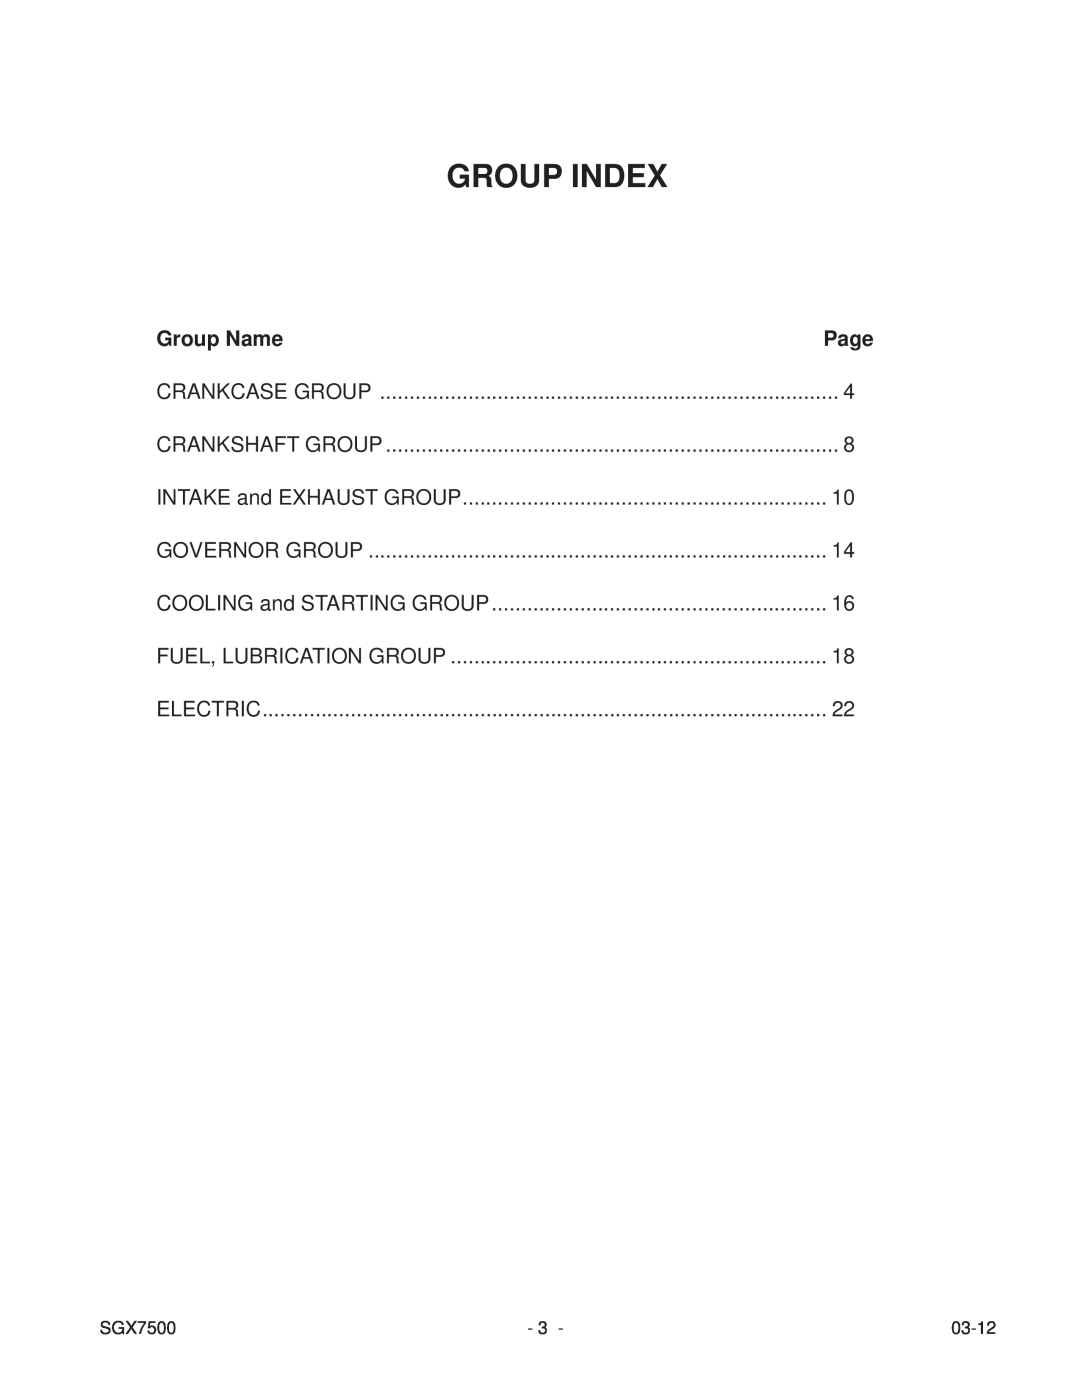 Subaru SGX7500 manual Group Index, Group Name 